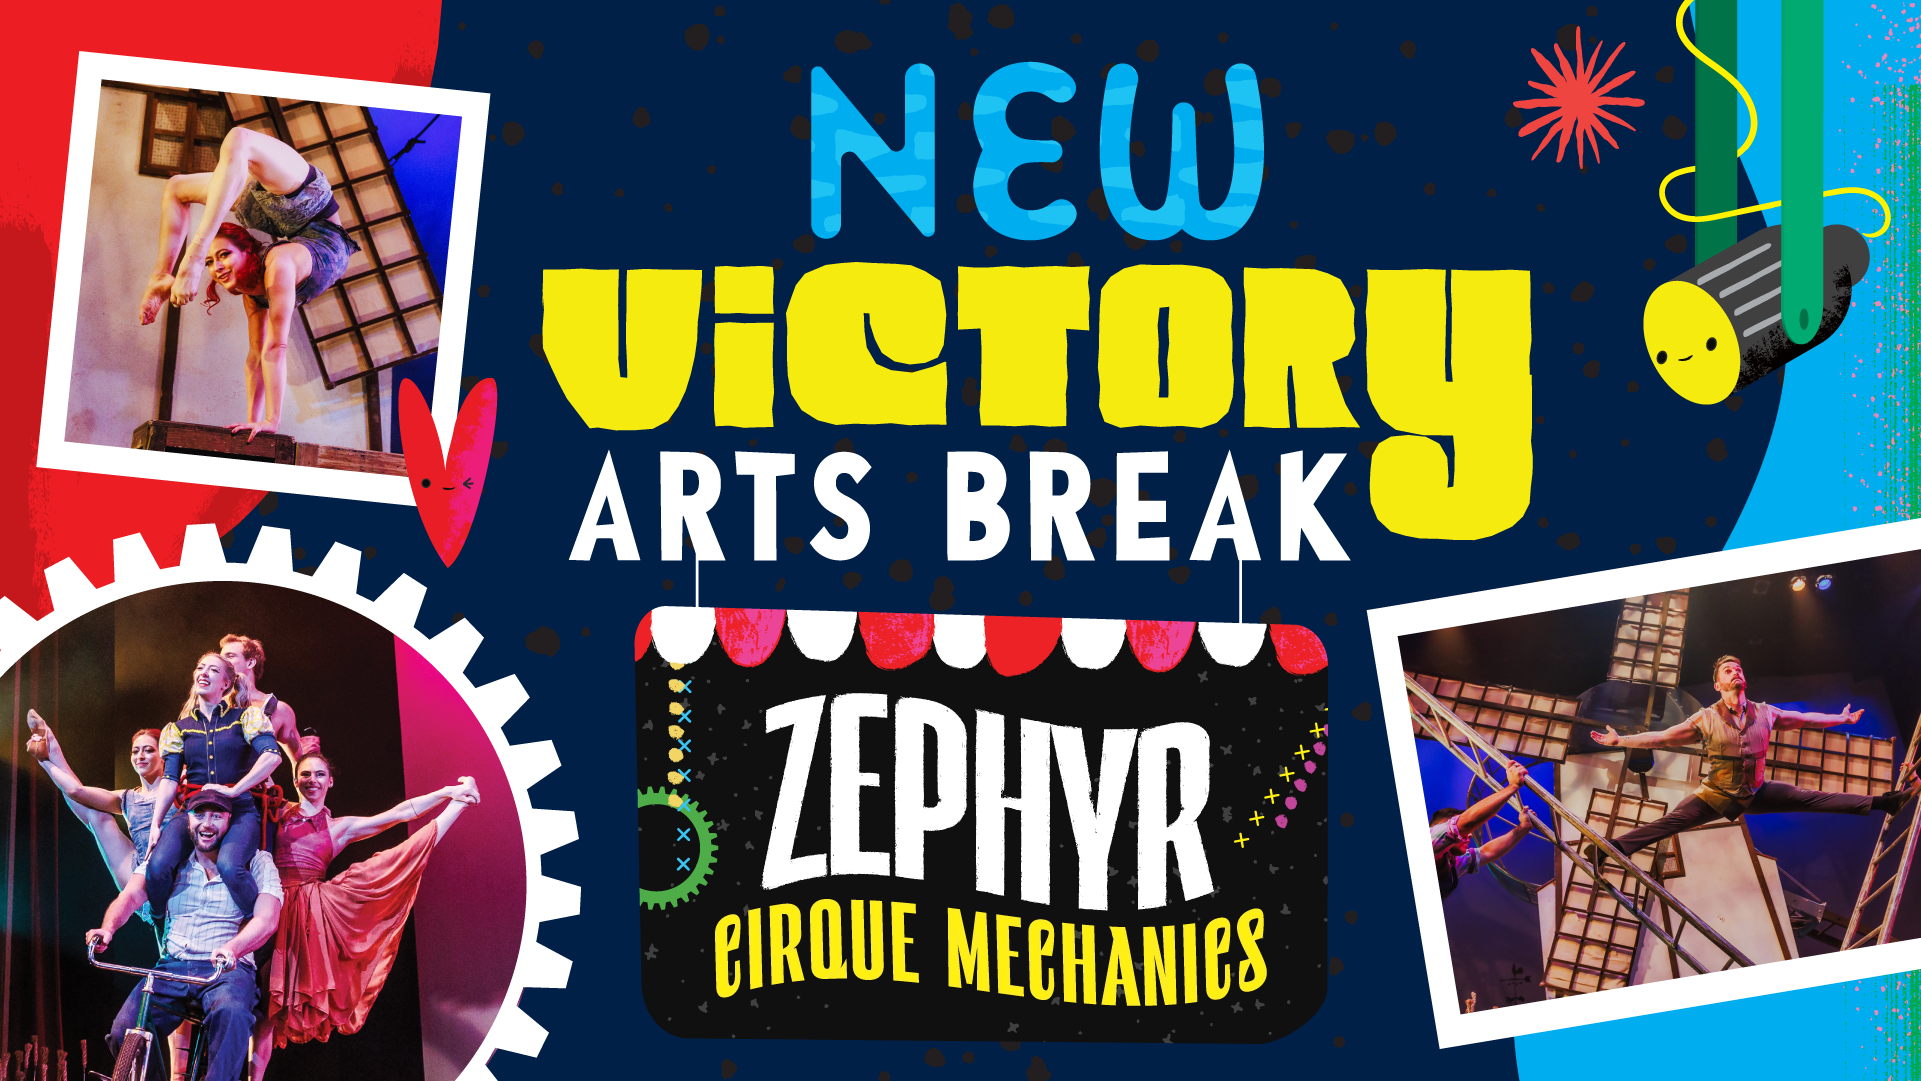 New Victory Arts Break: Zephyr